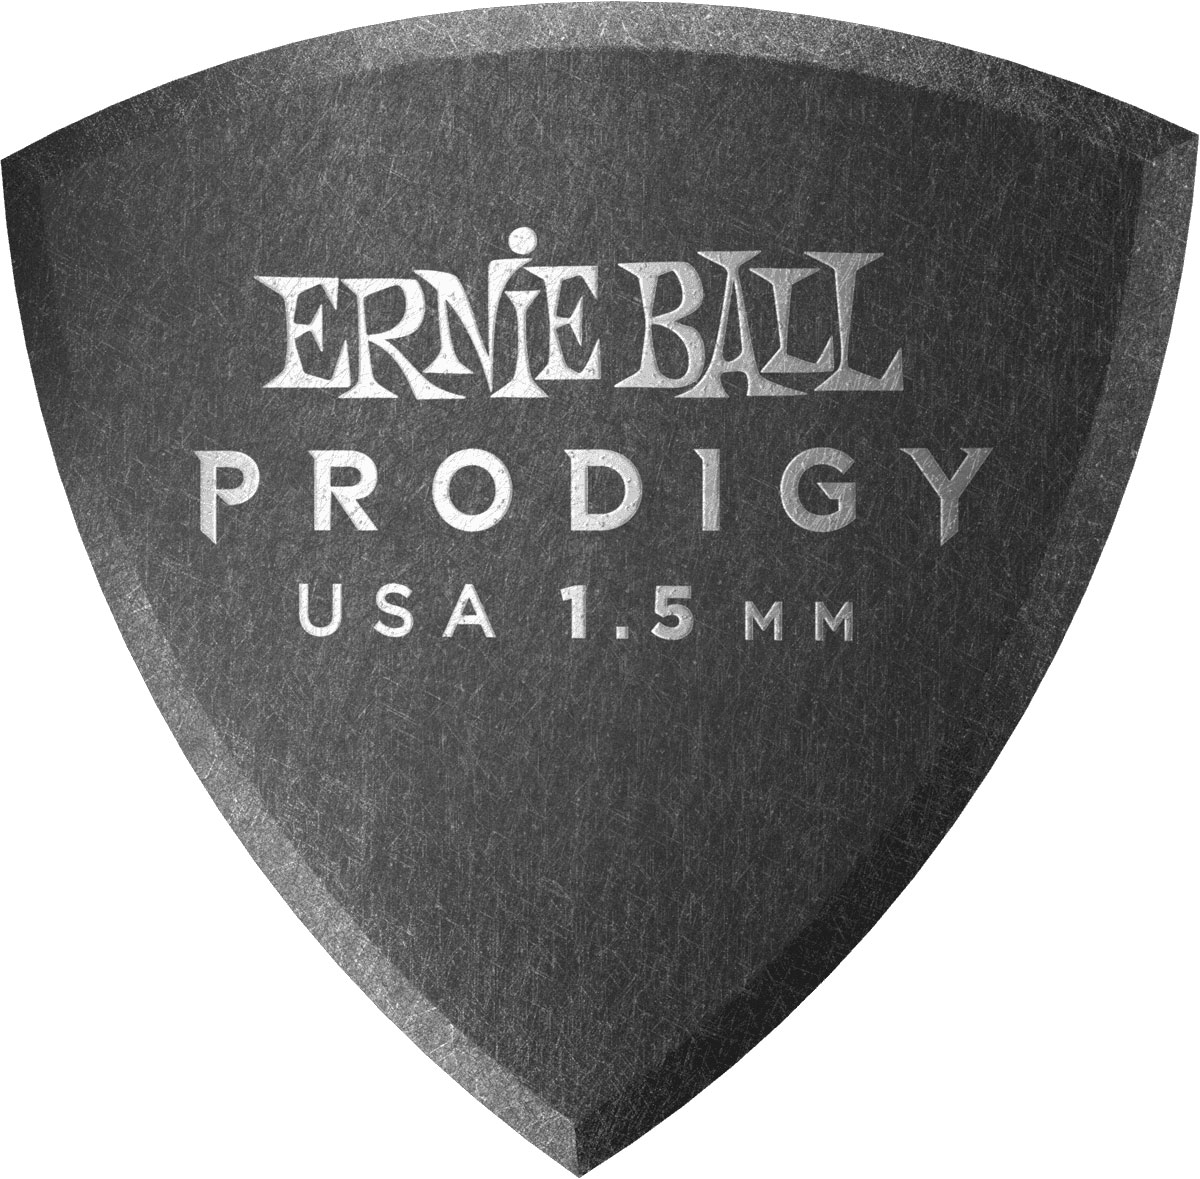 ERNIE BALL PRODIGY MEDIATORS PRODIGY BAG OF 6 BLACK SHIELD 1.5MM